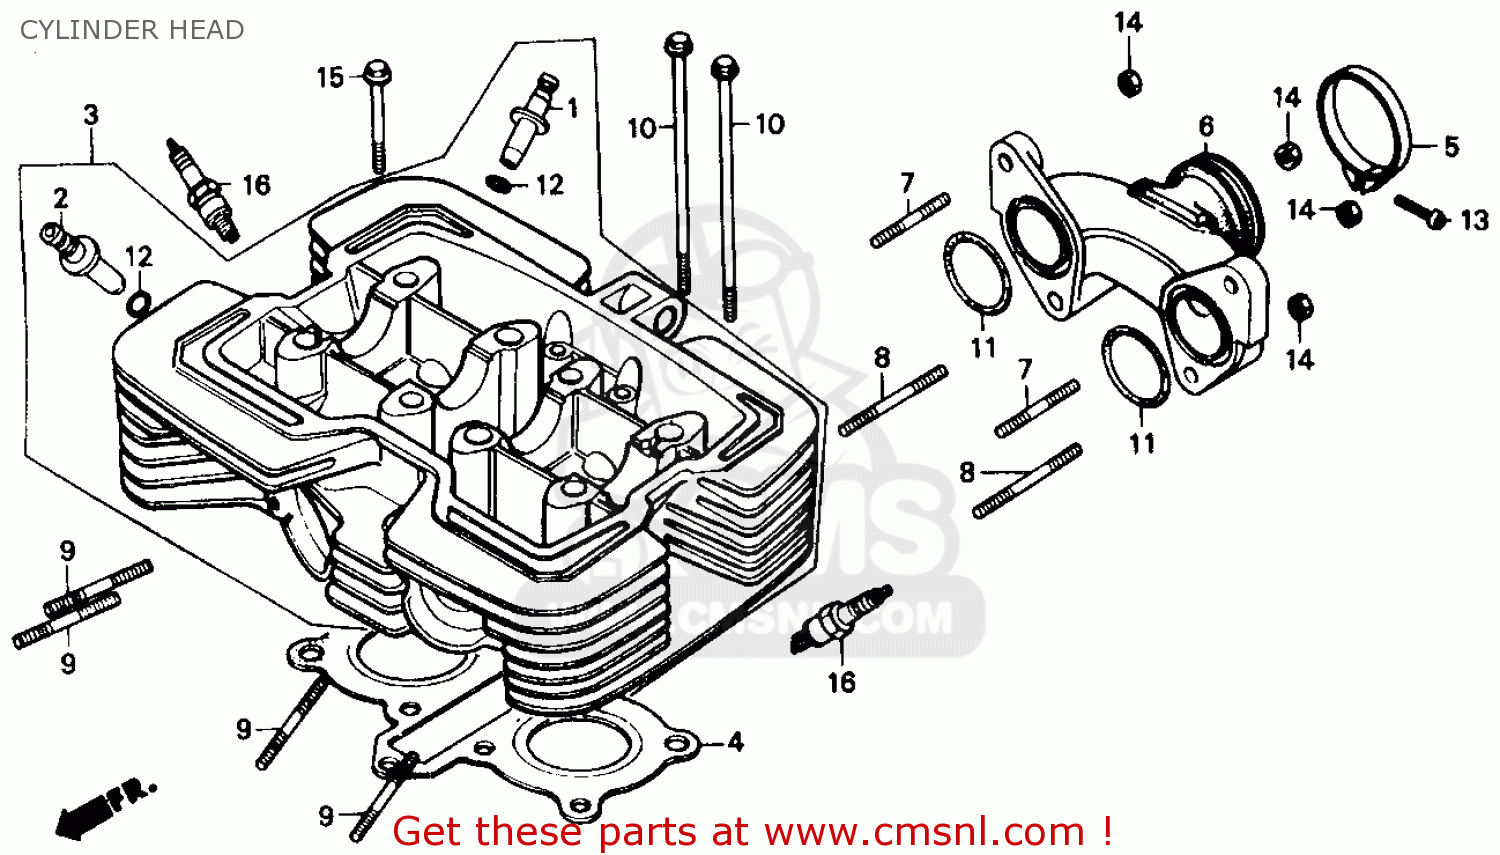 1985 Honda rebel valve adjustment